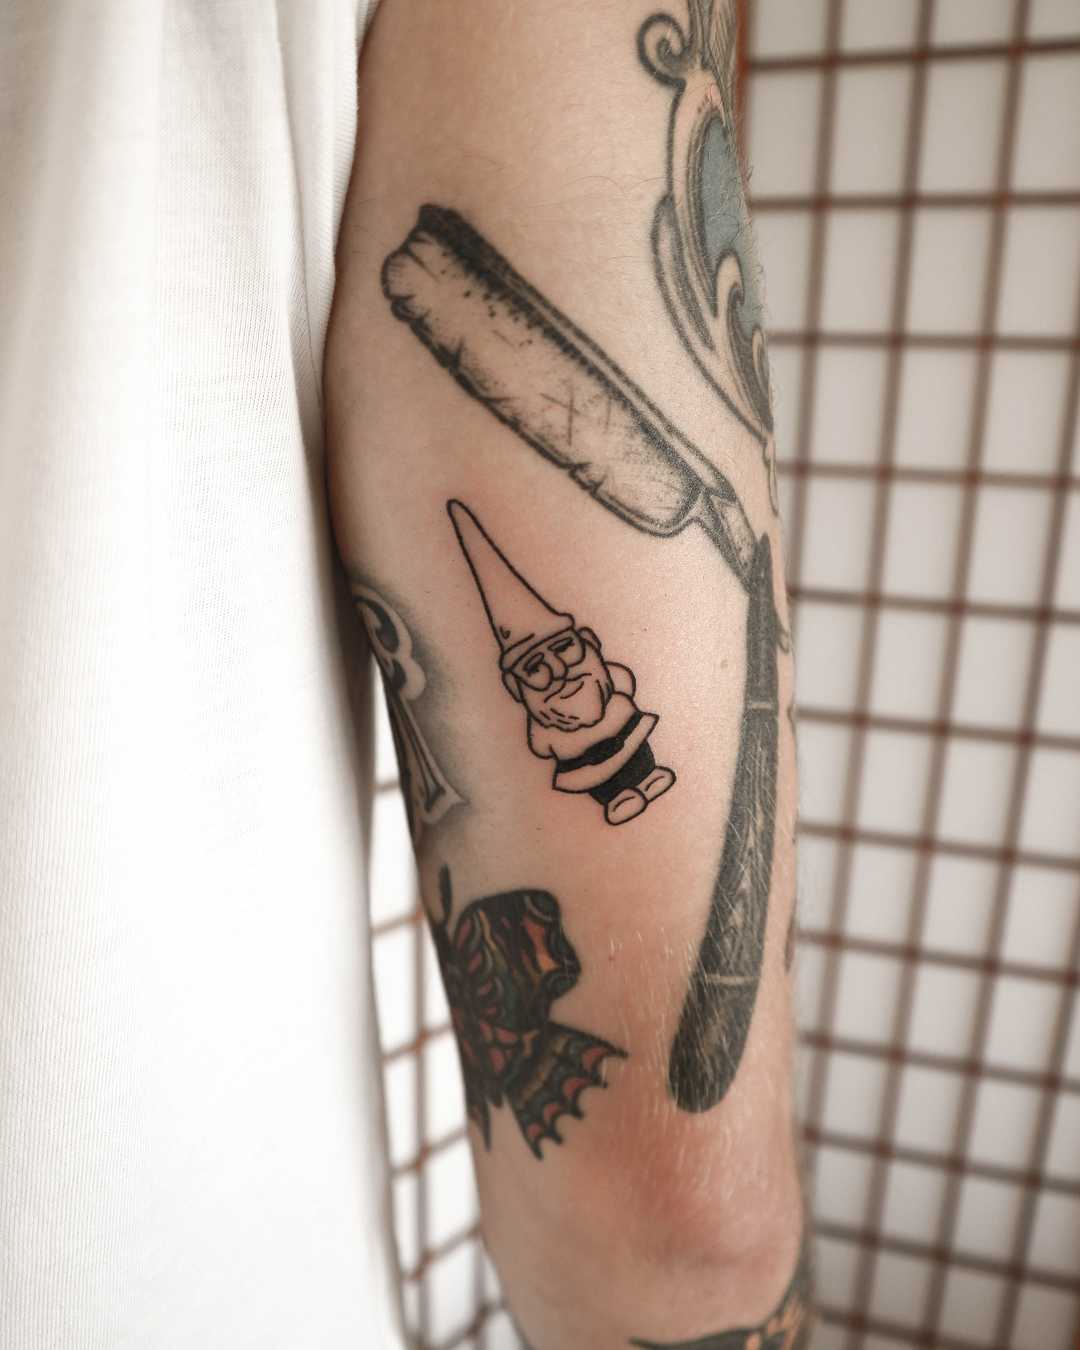 Black and Gray, Flower, Rose, Illustrative tattoo by Erik Baluyot